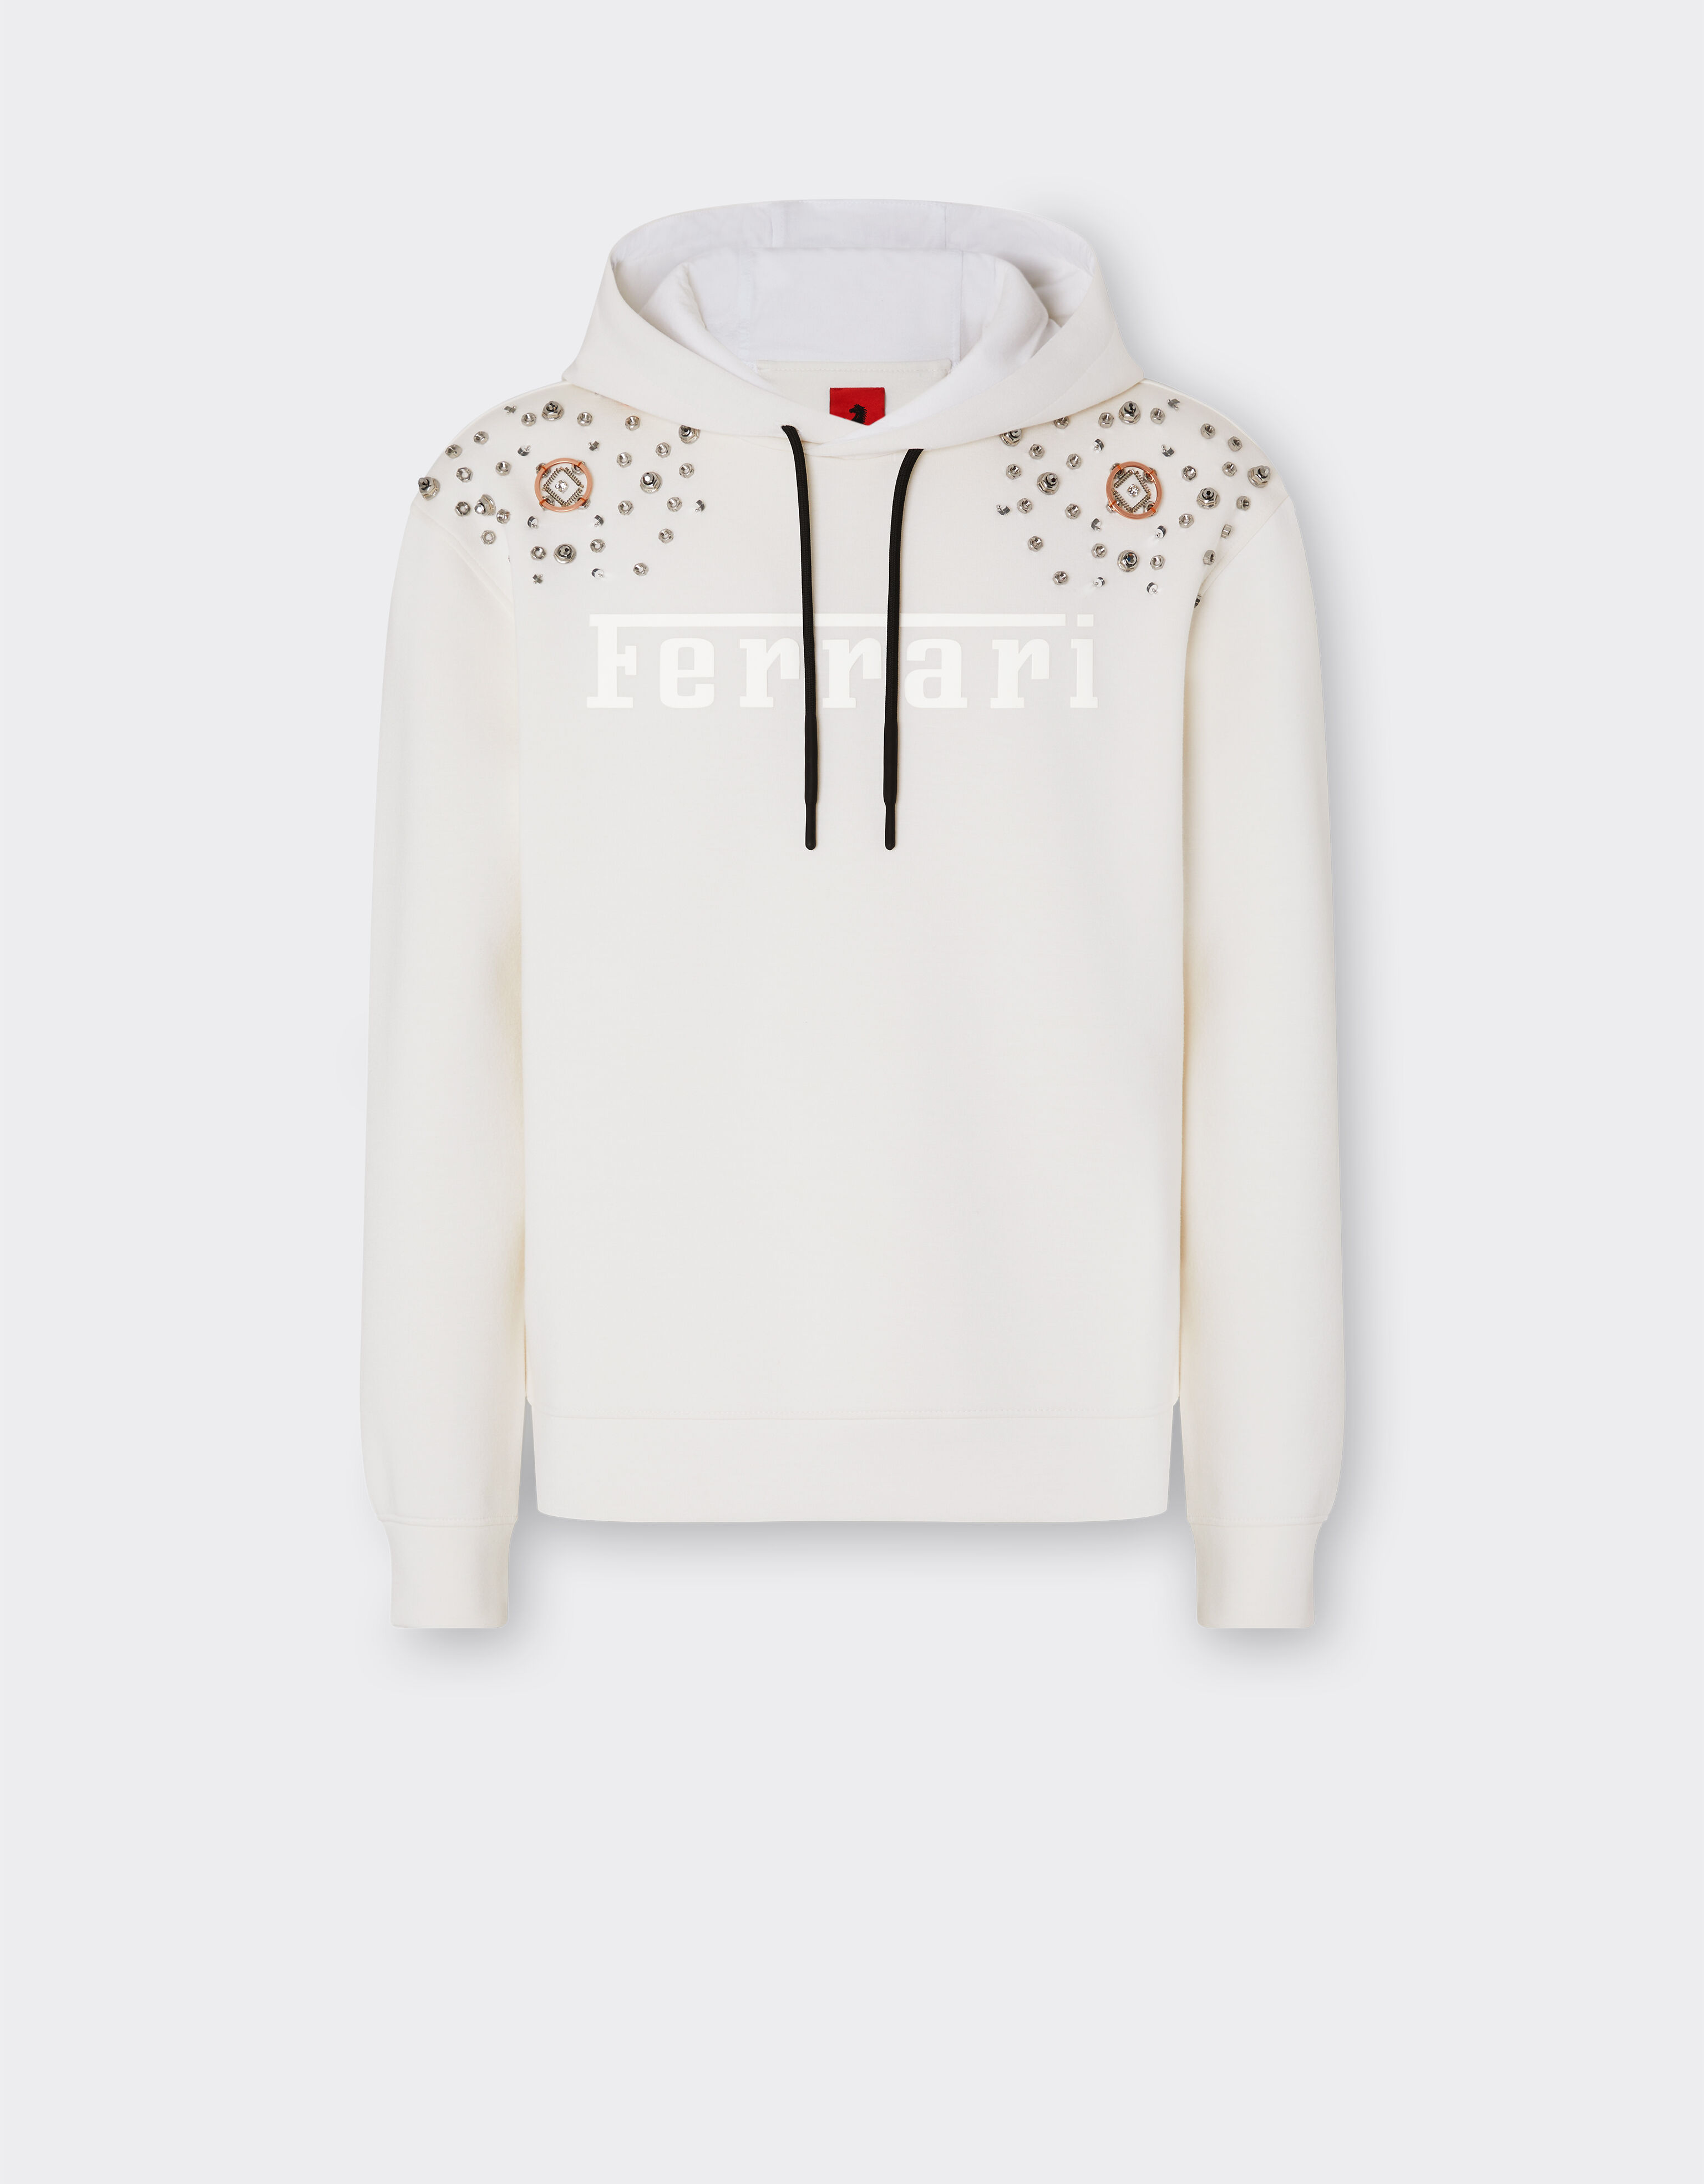 Ferrari Sweatshirt in scuba fabric with metal embroidery and Ferrari logo Optical White 48118f